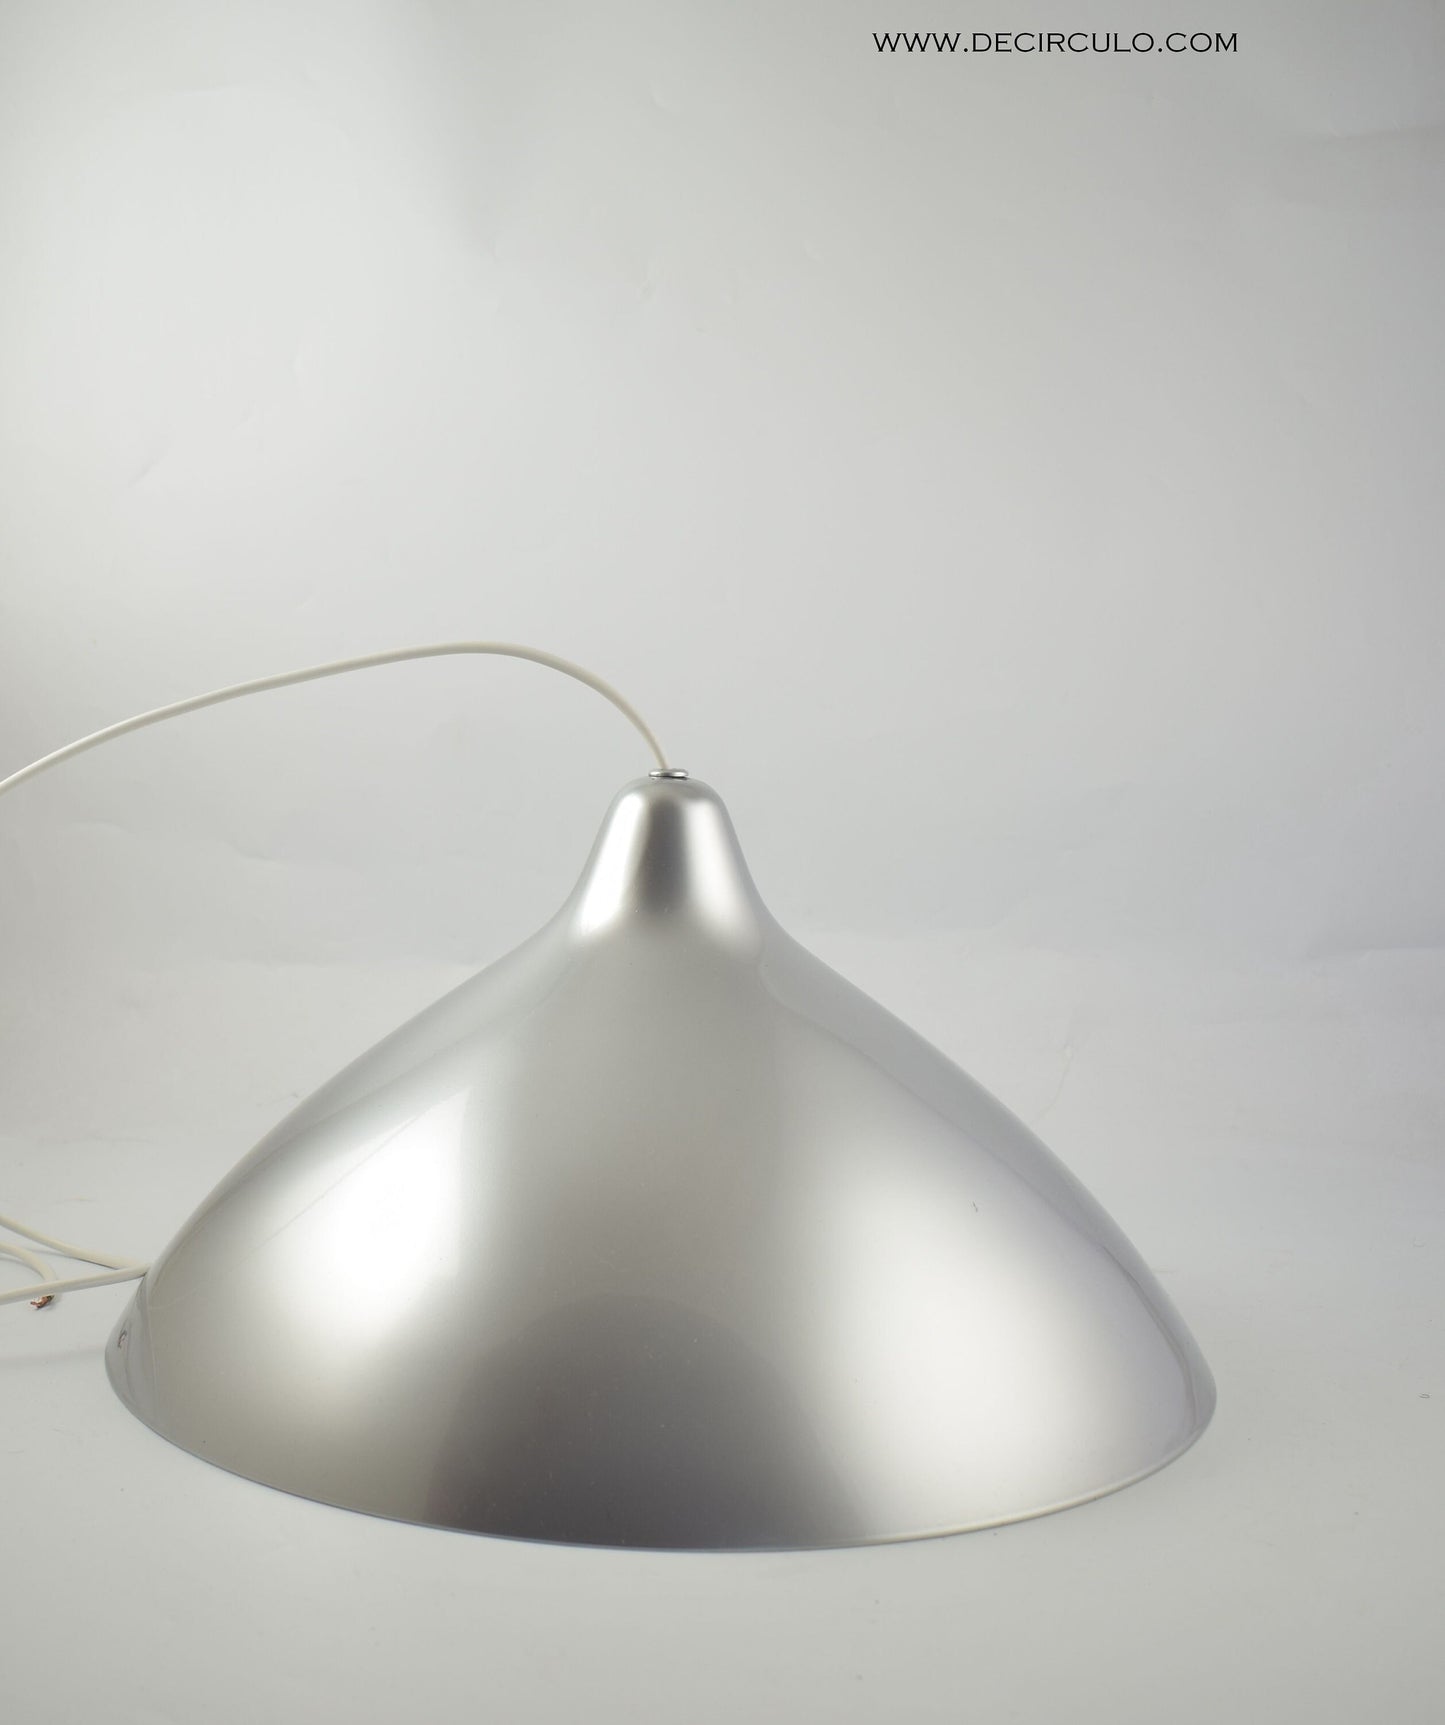 Stockmann Orno ontwerp Lisa Johansson-Pape aluminium hanglamp gemaakt in Finland 1950-1959